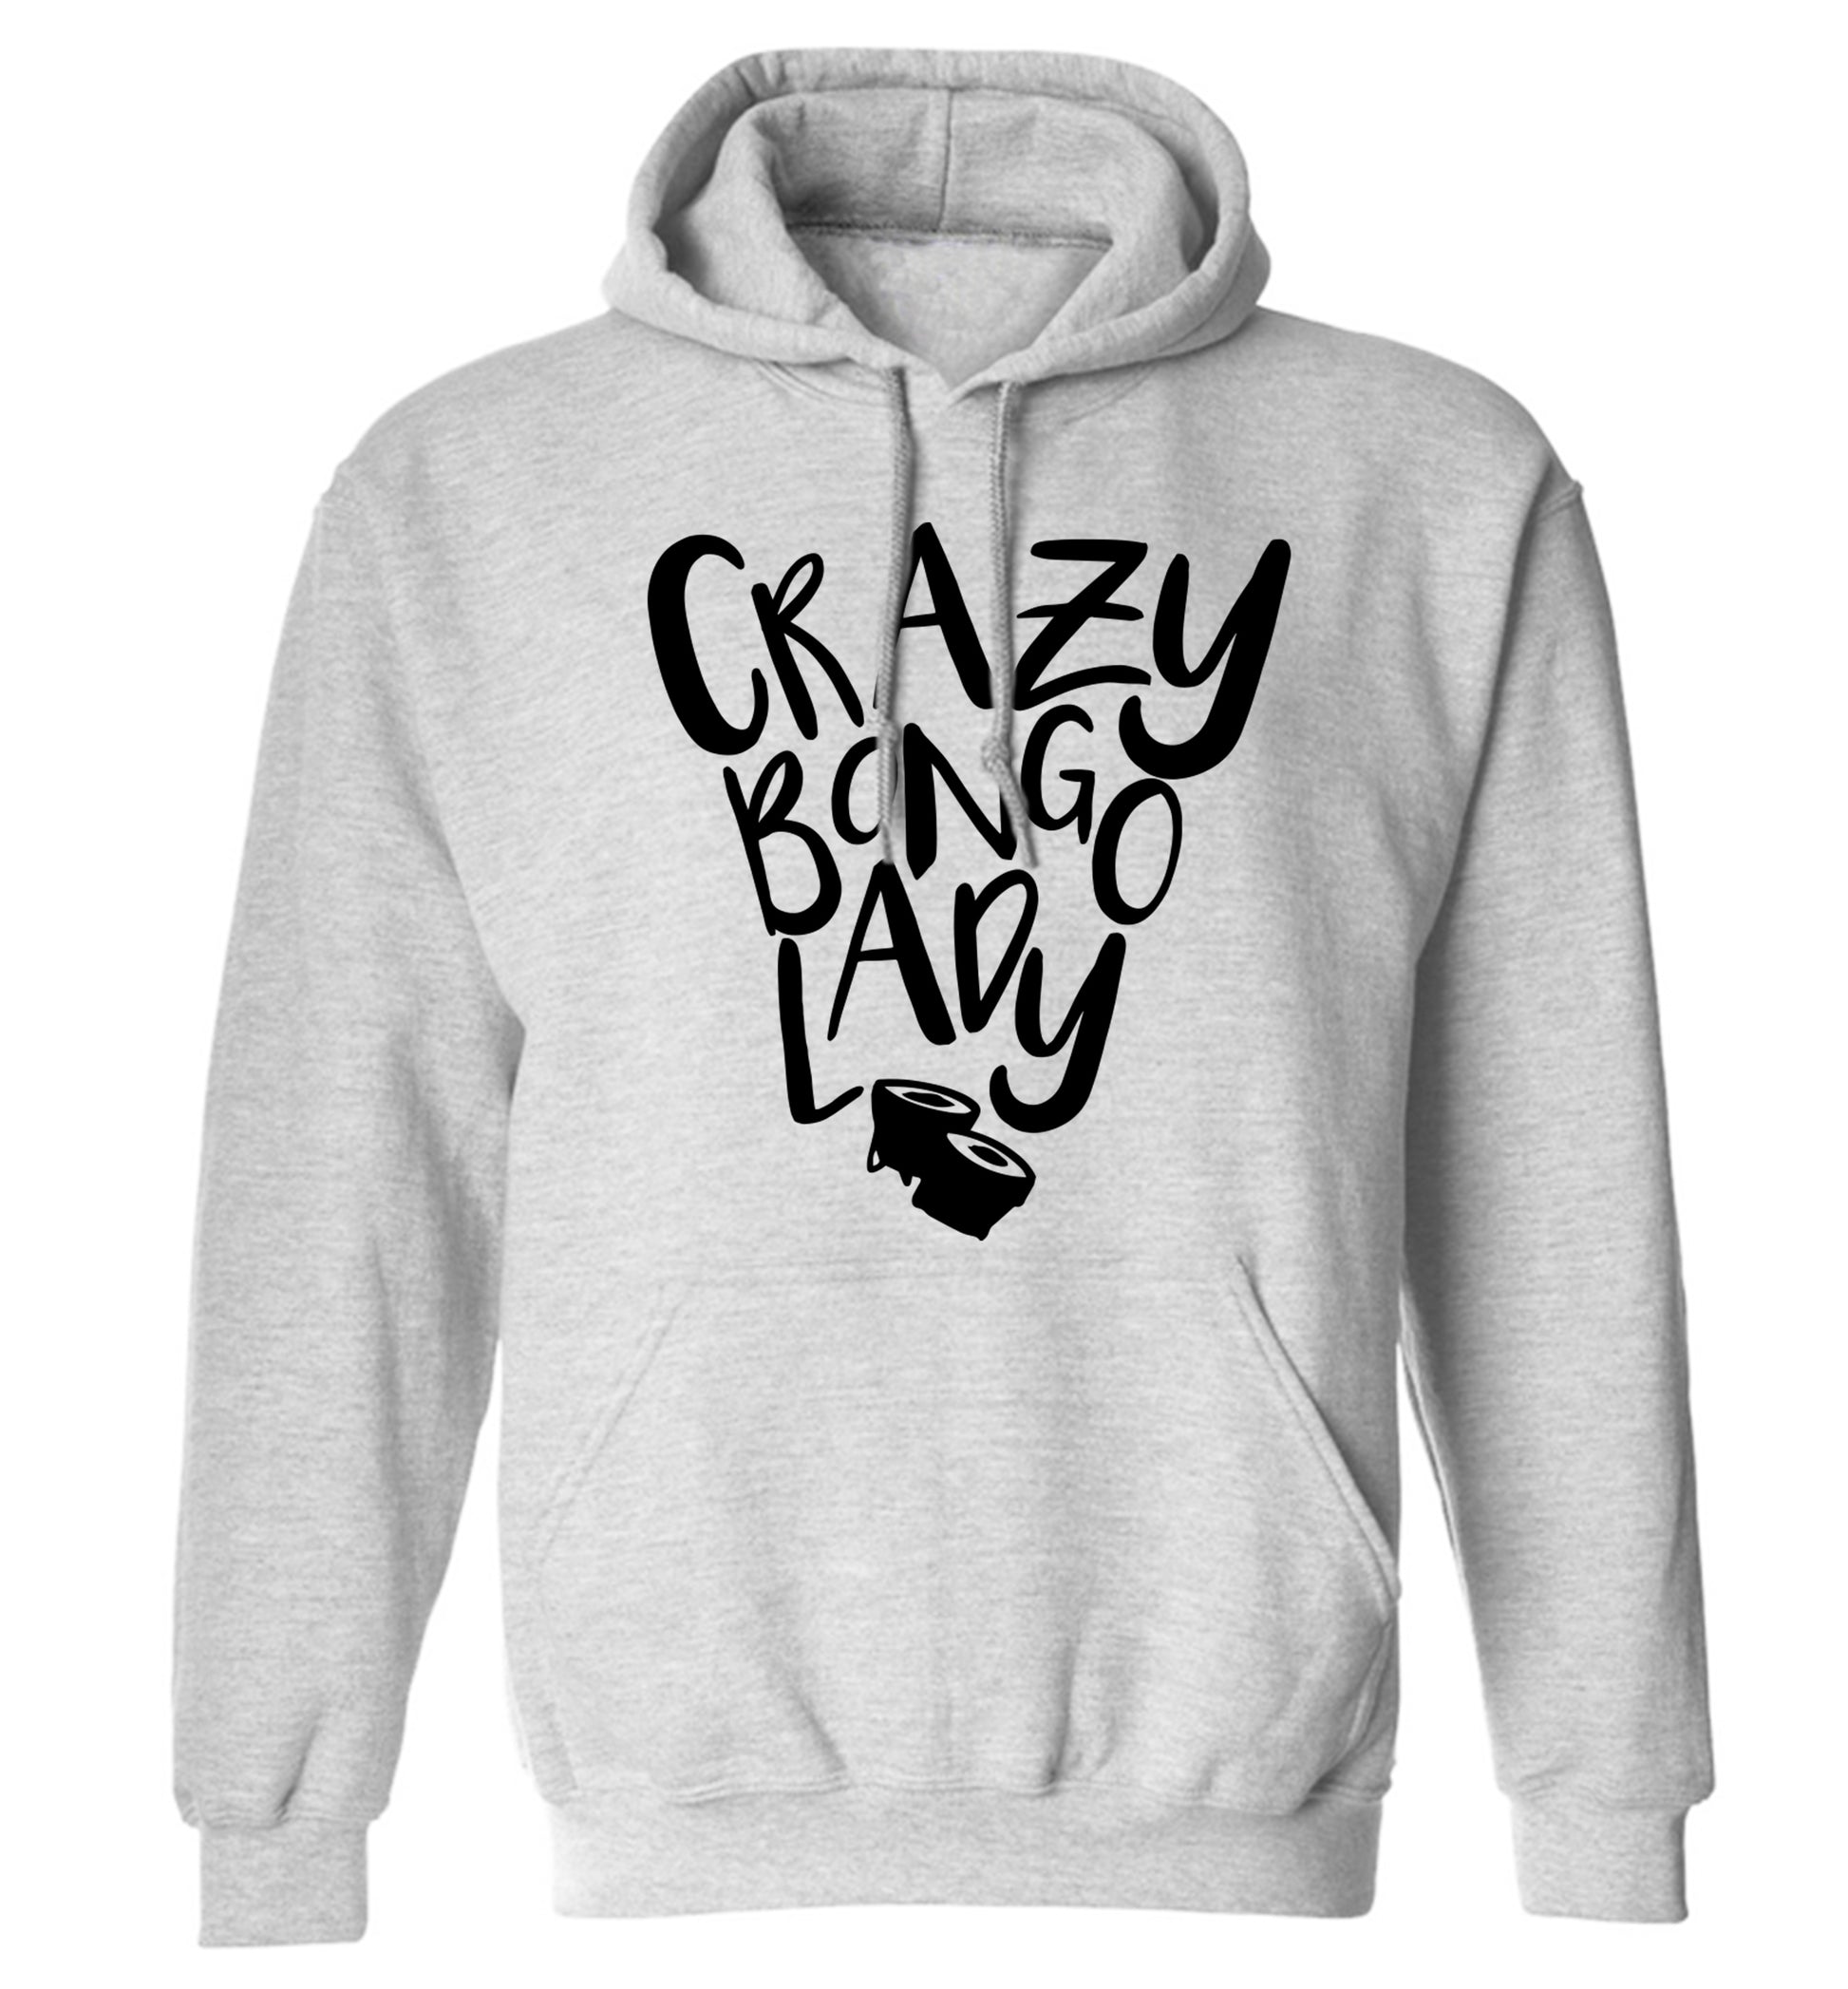 Crazy bongo lady adults unisex grey hoodie 2XL